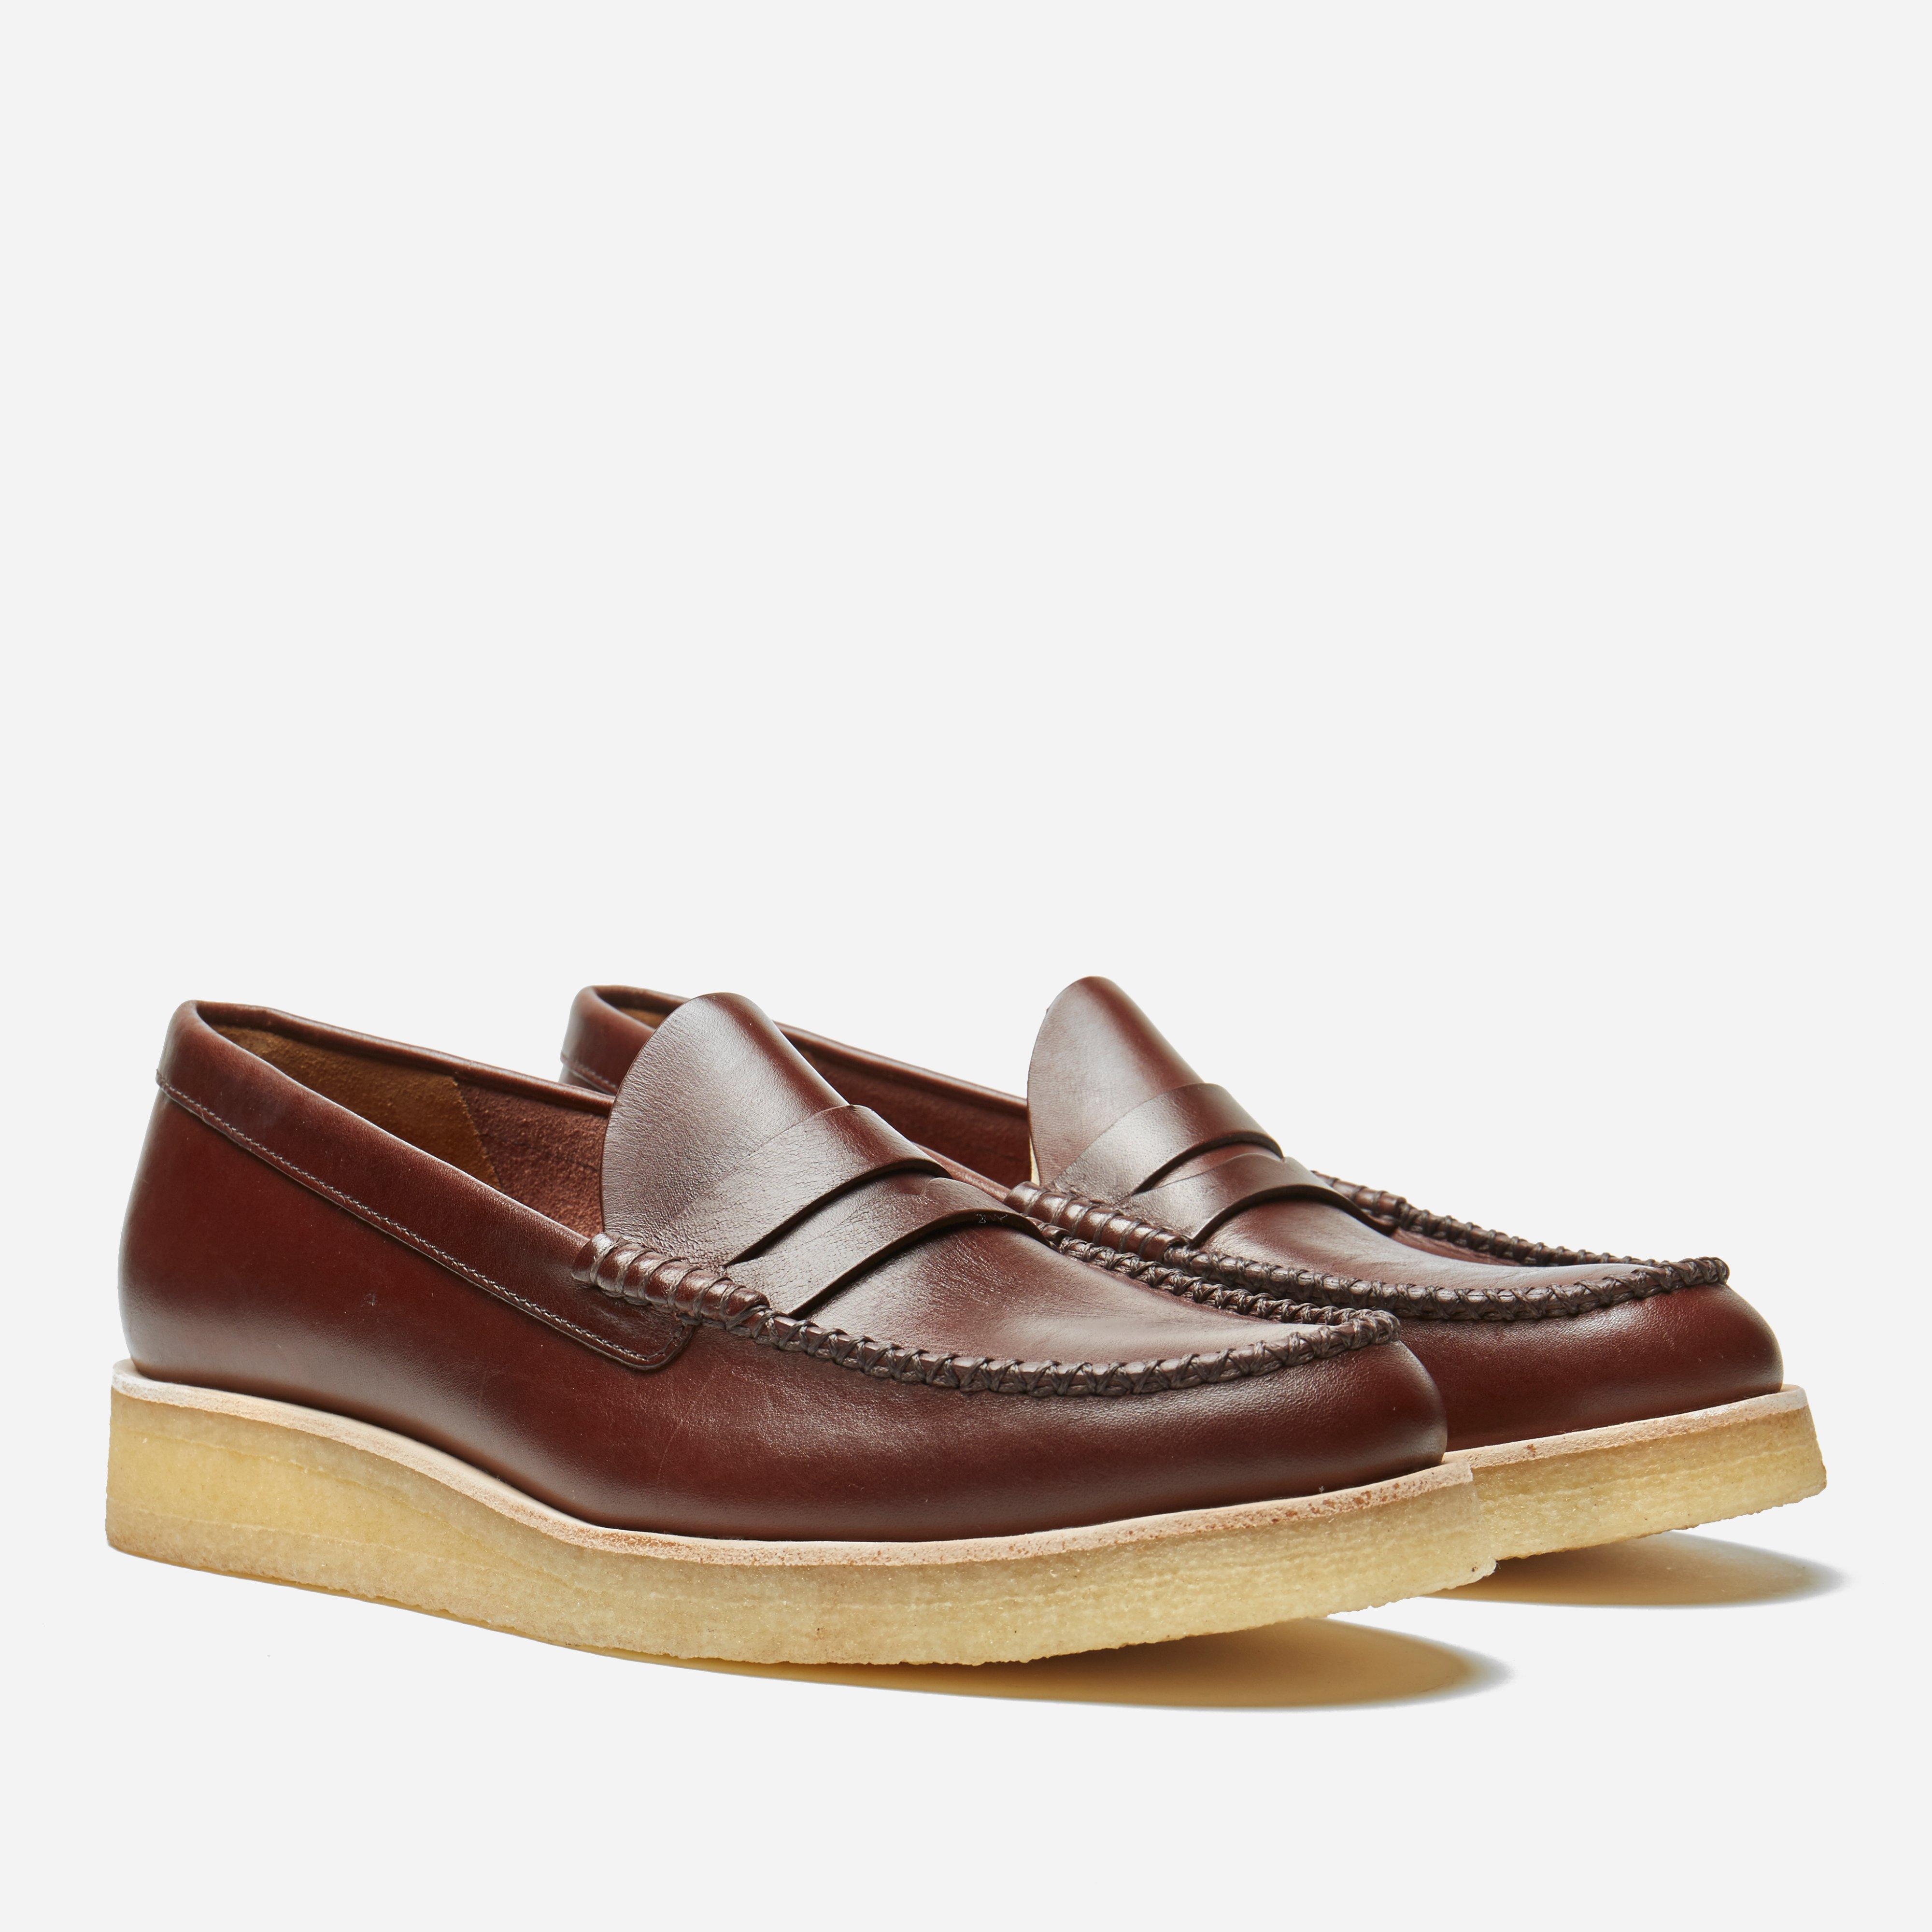 Lyst - Clarks Burcott Loafer In Bordeaux Leather in Brown for Men